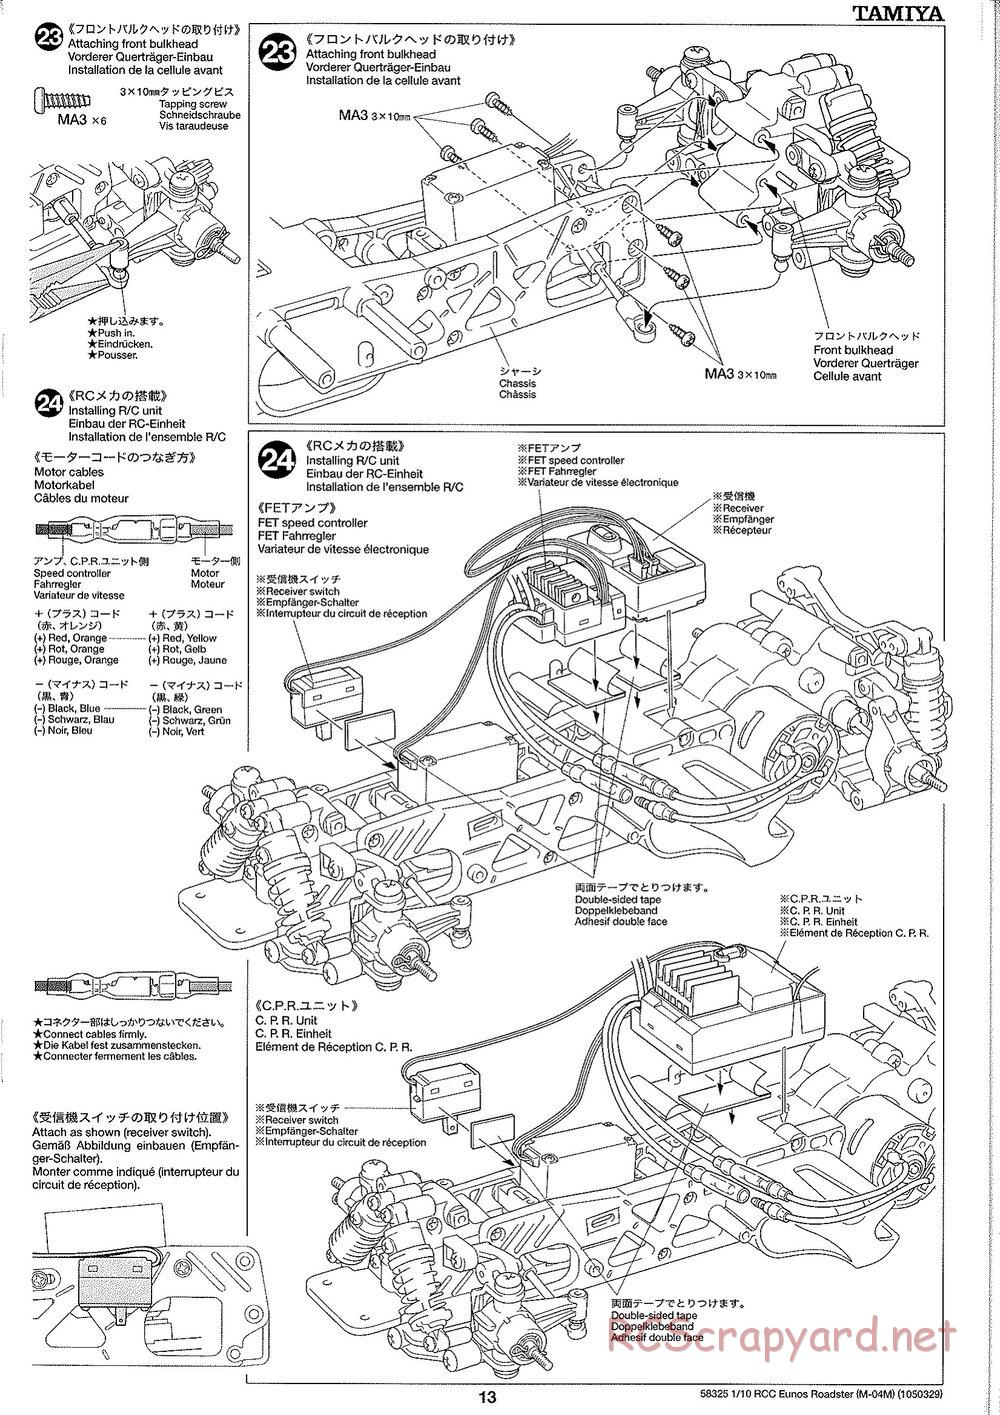 Tamiya - Eunos Roadster - M04M Chassis - Manual - Page 13